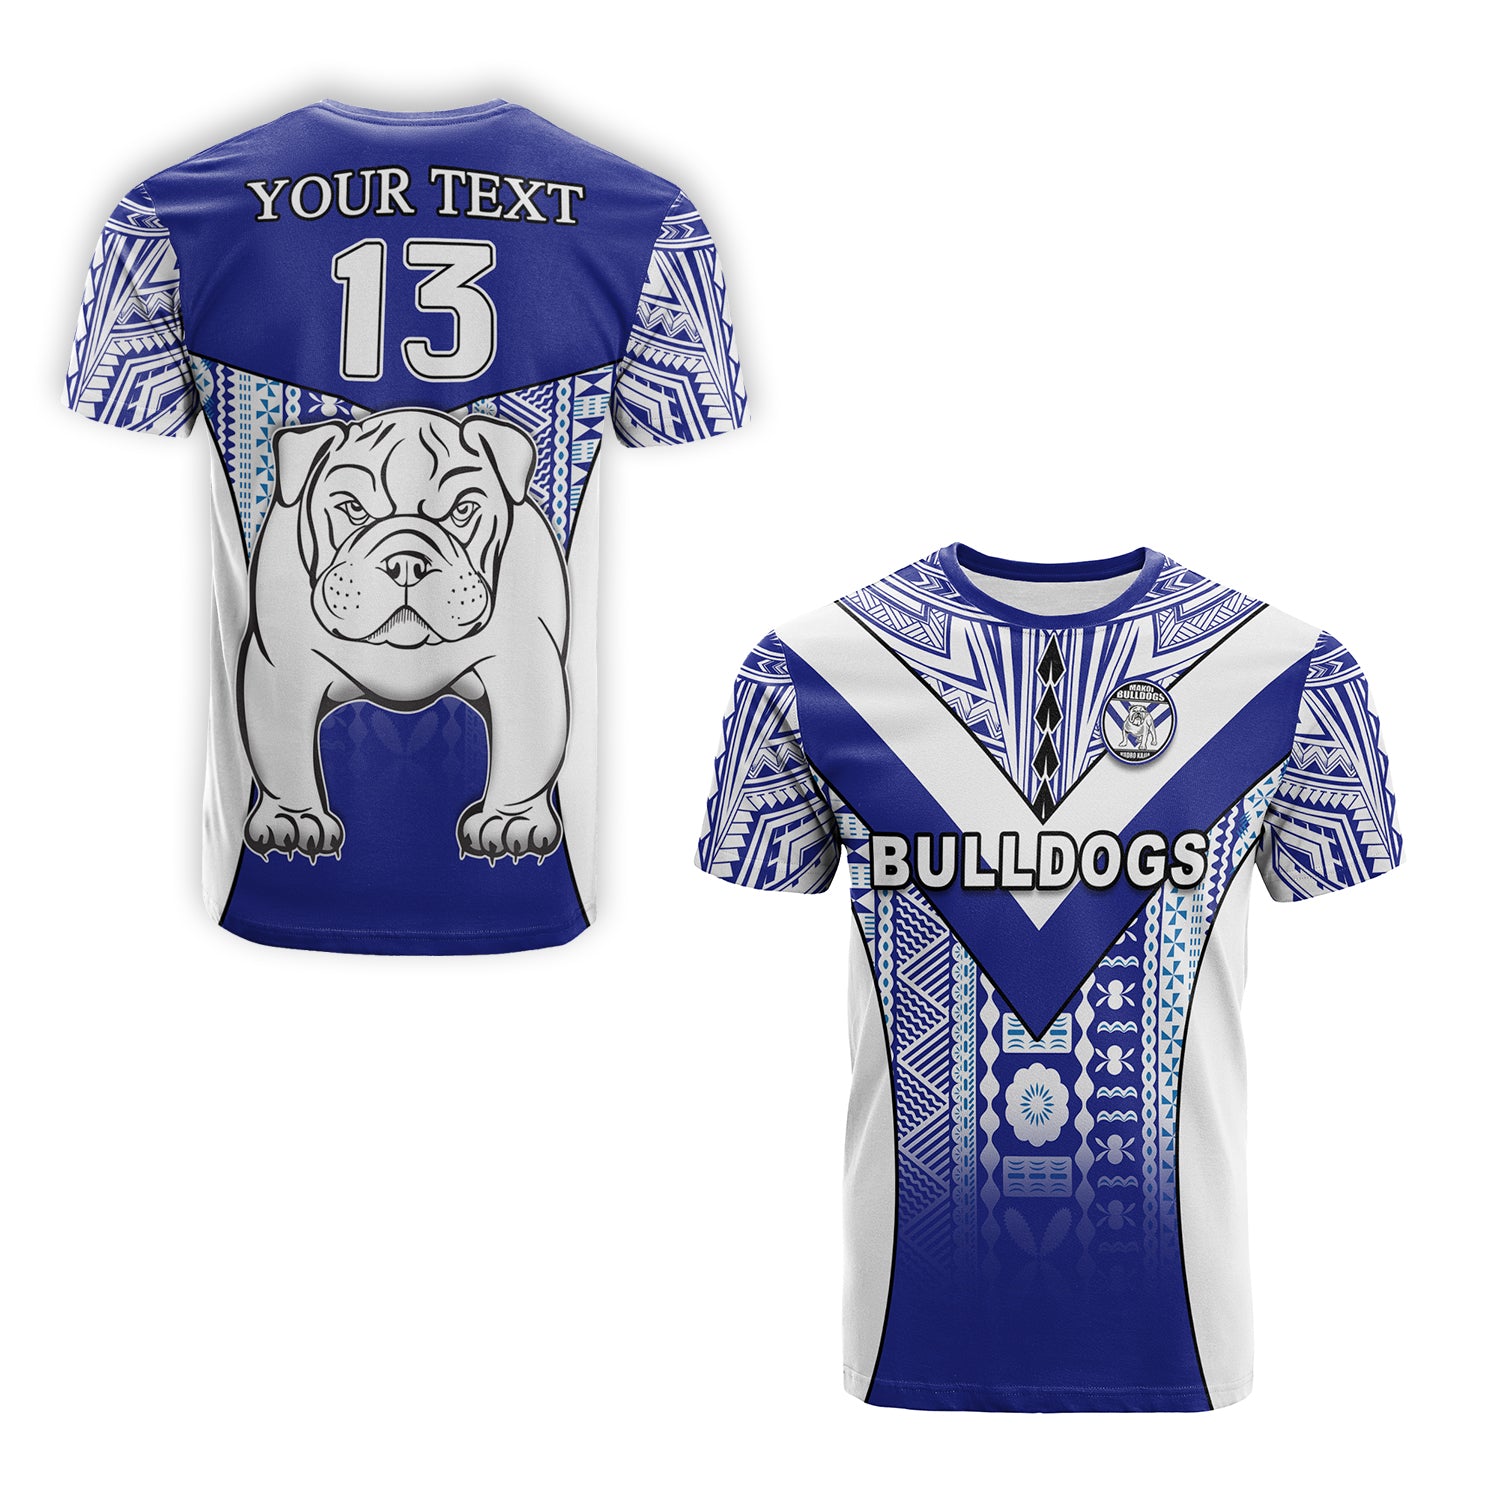 Custom Makoi Bulldogs T Shirt Mix Tapa Fijian Custom Text and Number LT13 Unisex Blue - Polynesian Pride